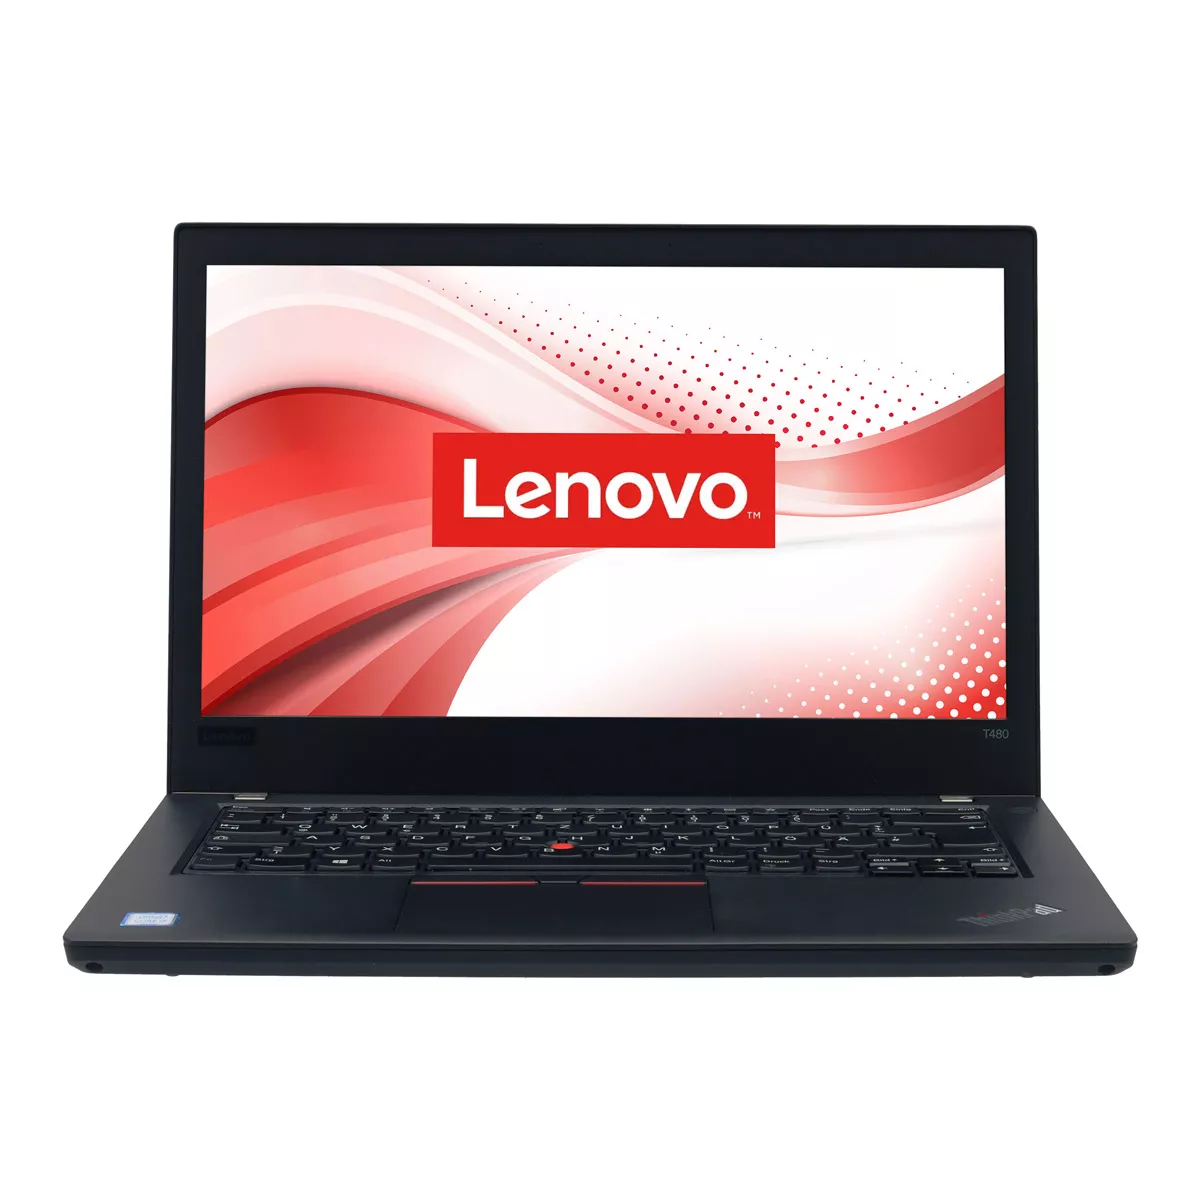 Lenovo ThinkPad T480 Core i5 8350U Full-HD 240 GB M.2 SSD Webcam B